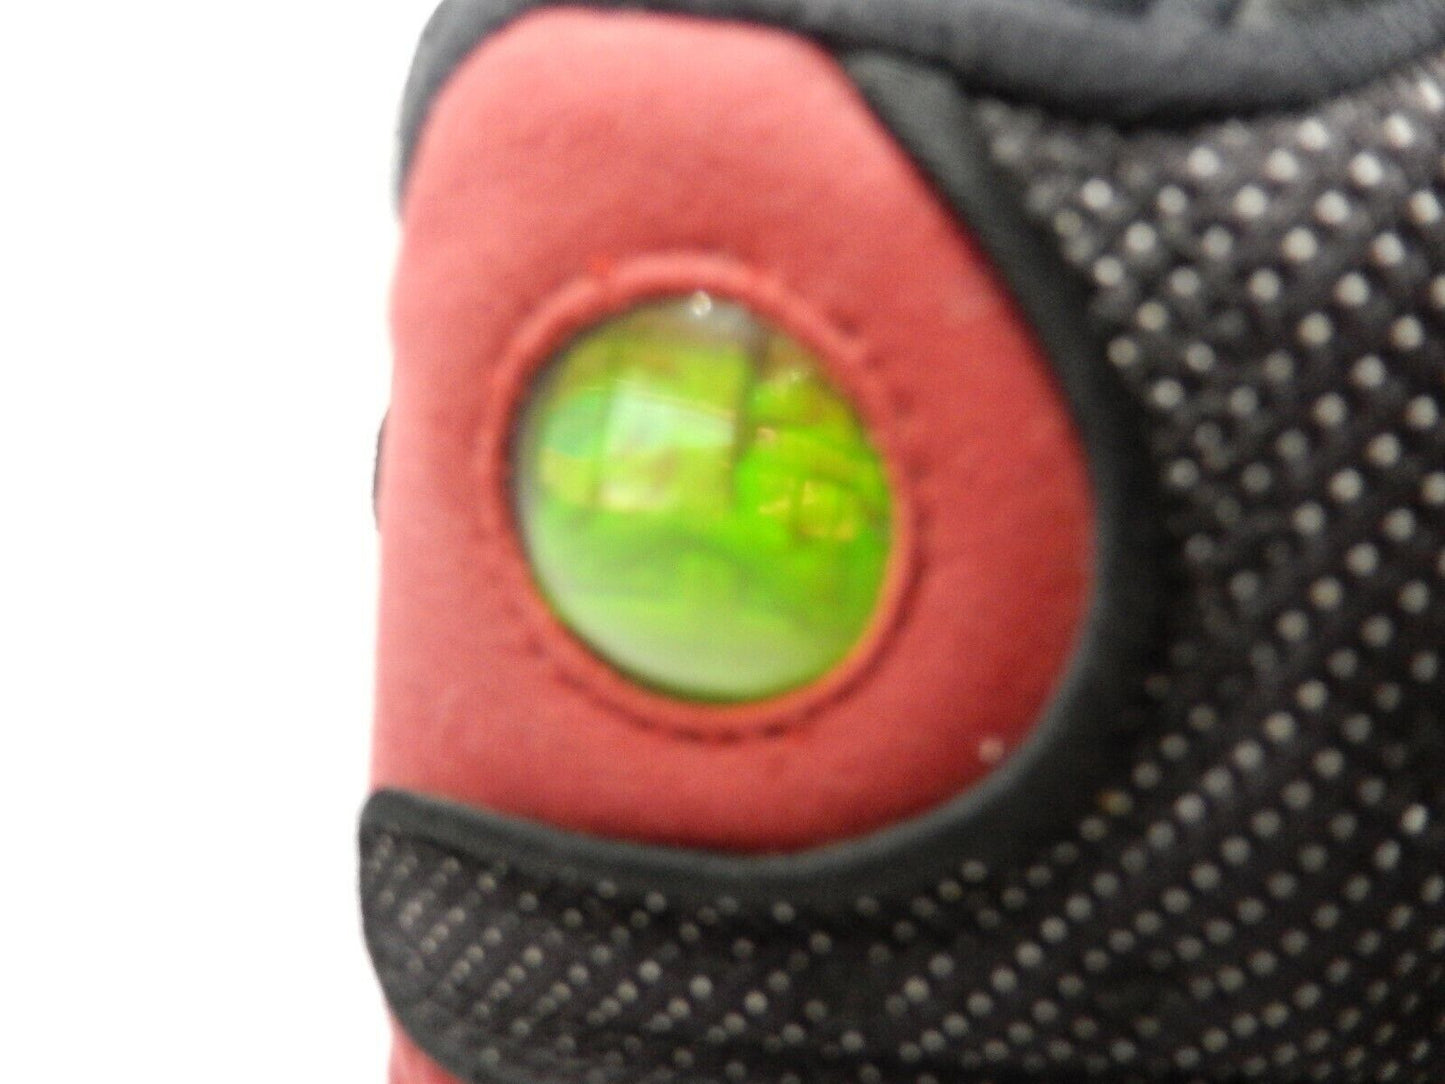 Nike Air Jordan XIII 13 Retro Bred 2012 Black/Varsity Red Size 7 Y 414574-010